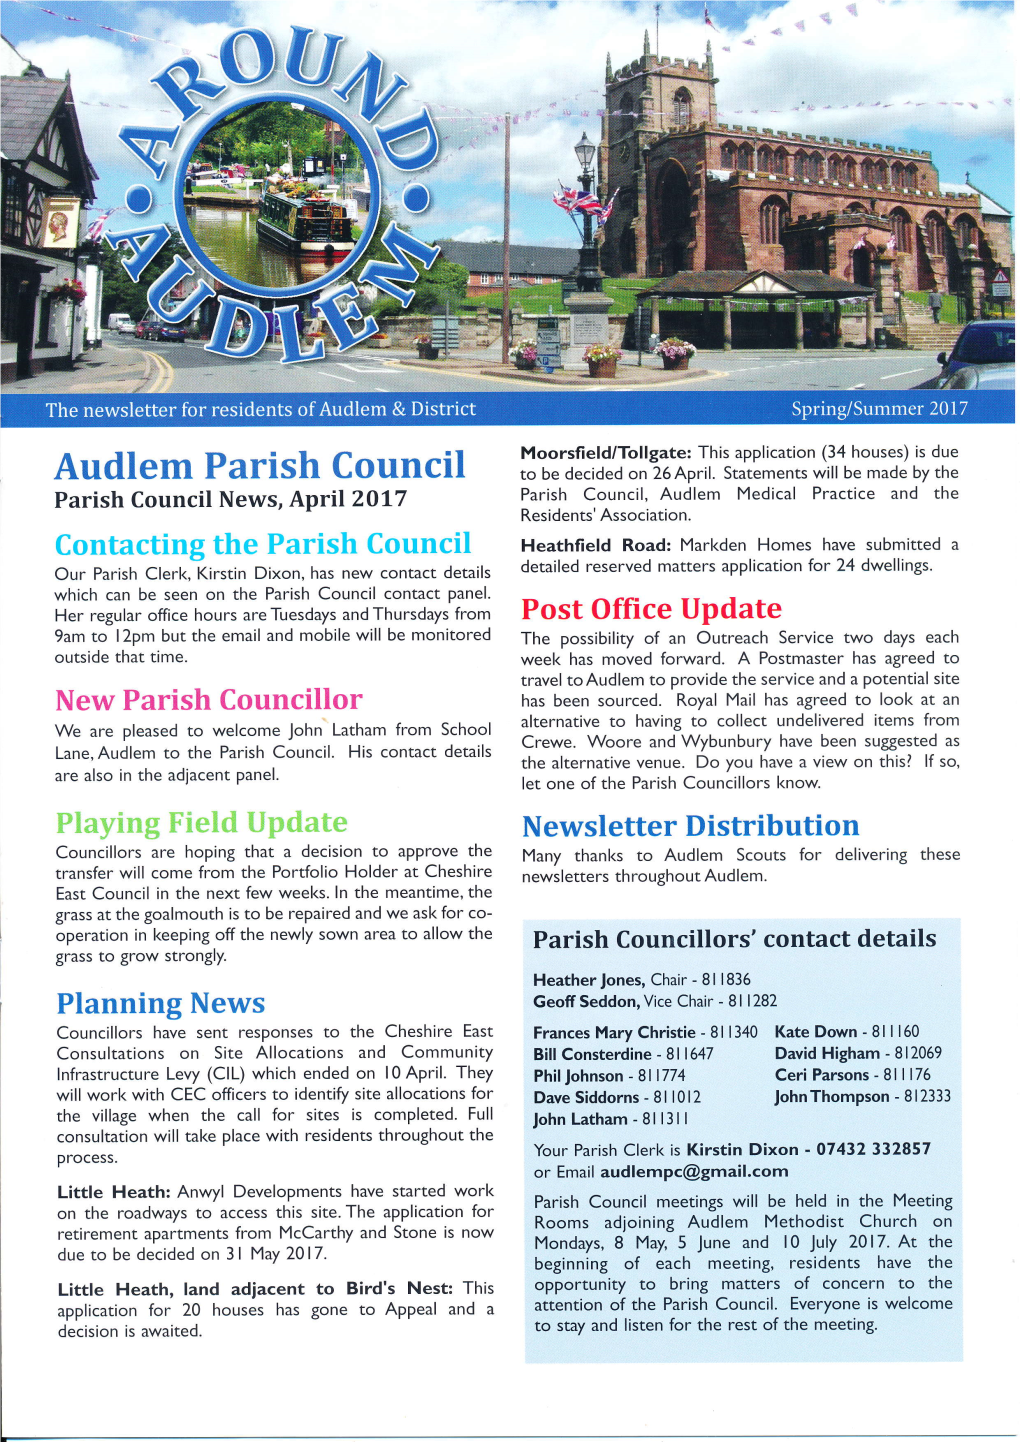 Audlem Parish Council to Be Decided on 26April